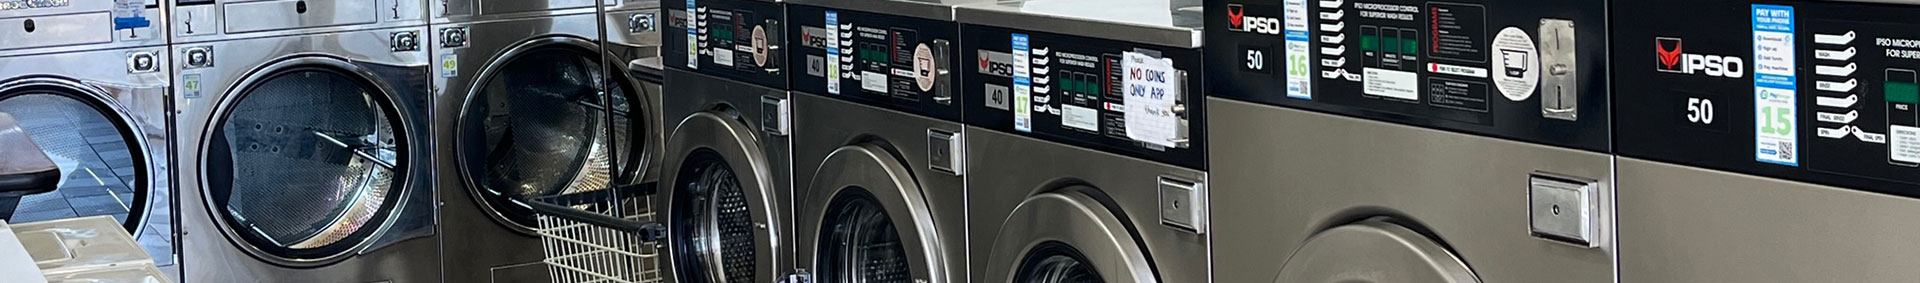 San Luis Obispo Laundromat - Cal Poly Laundromat - Laundry Services - Wash and Fold - Business Laundry - Swish and Swirl Laundromat